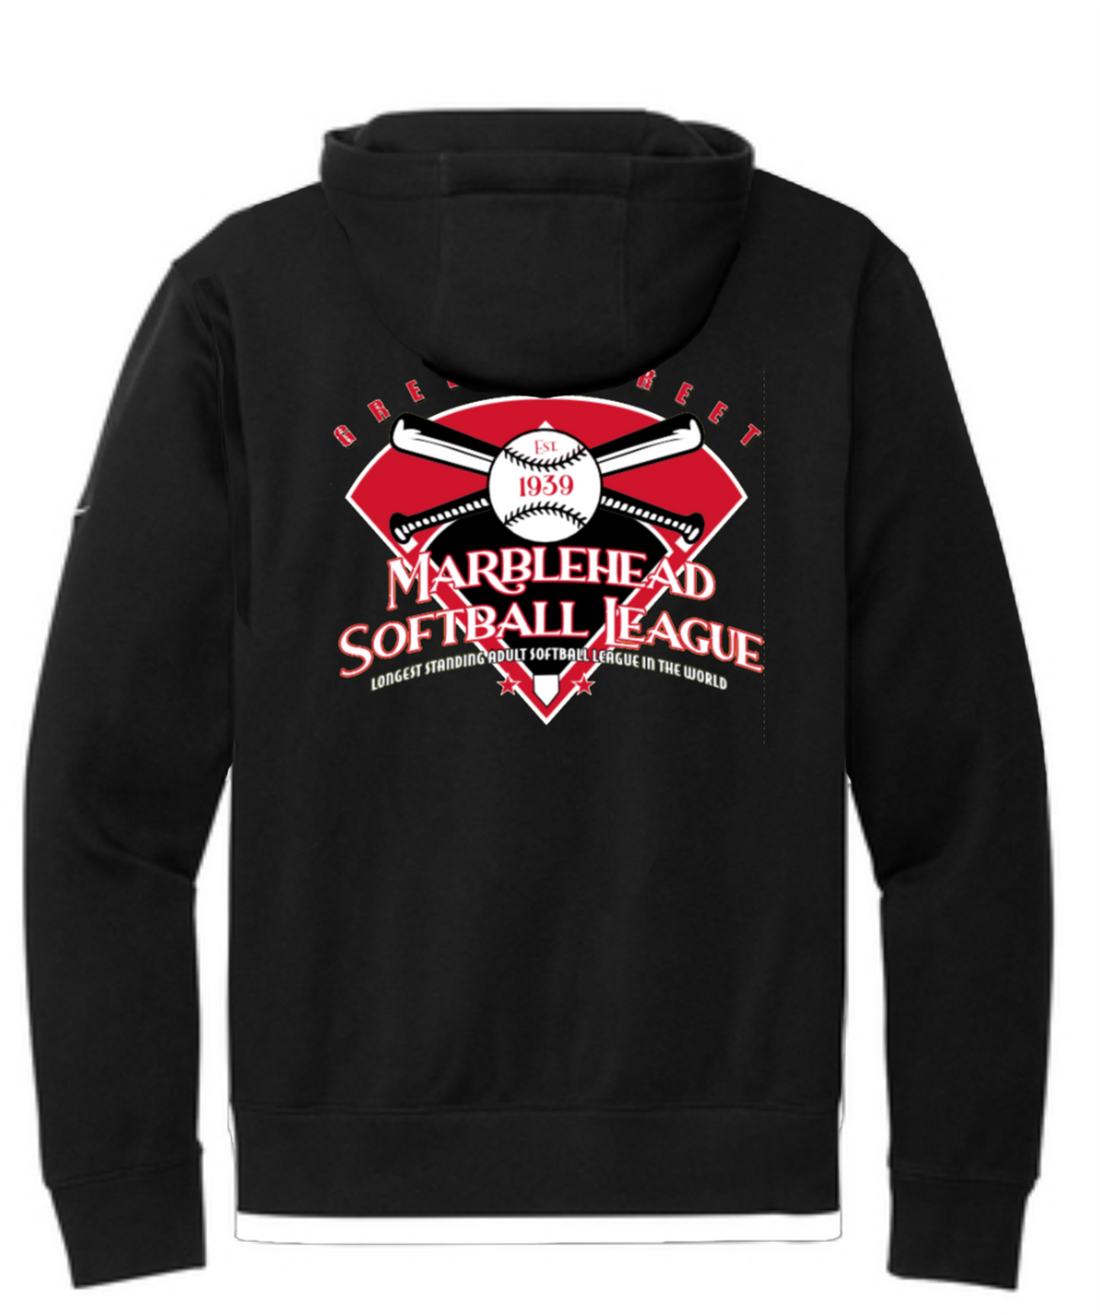 Marblehead Softball League Premium Hoodie